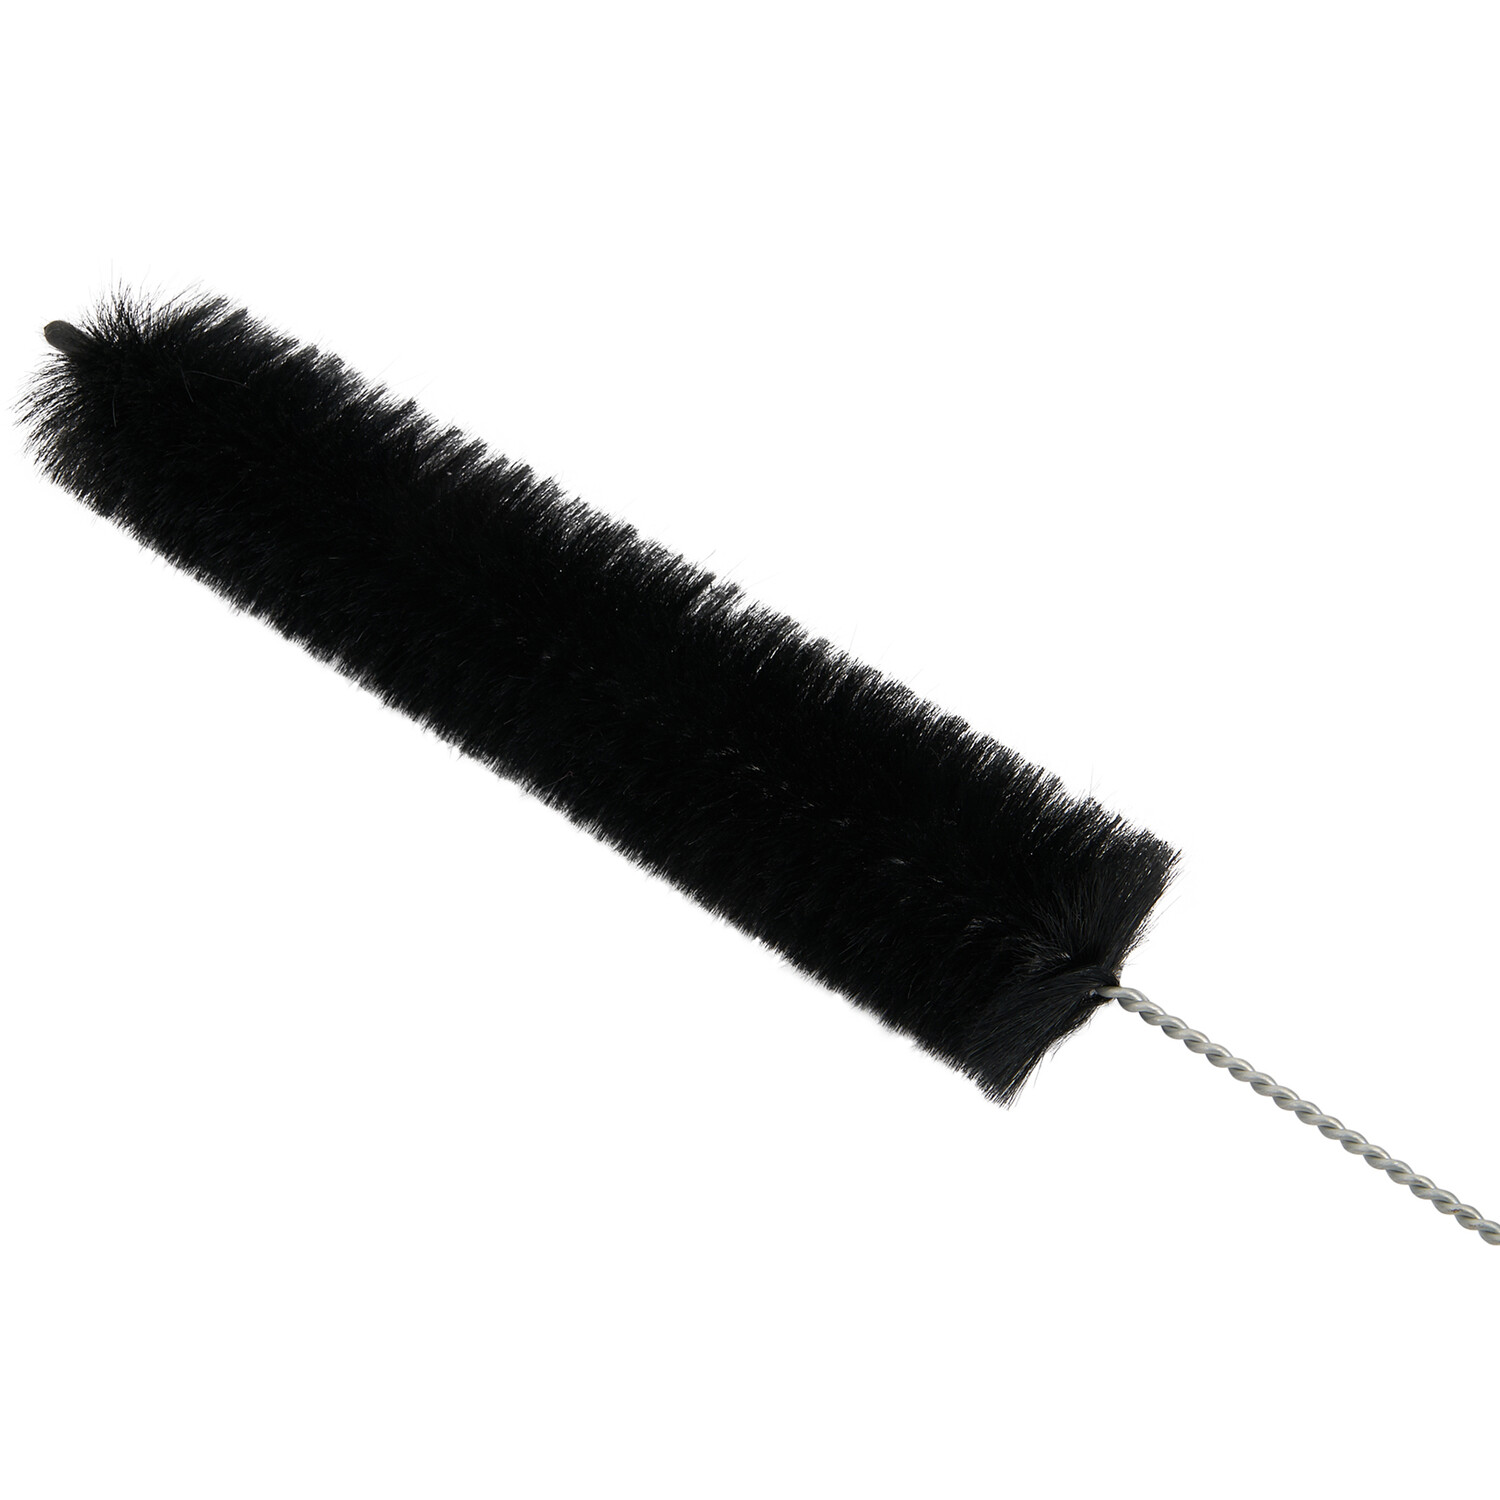 Radiator Black Brush Image 1